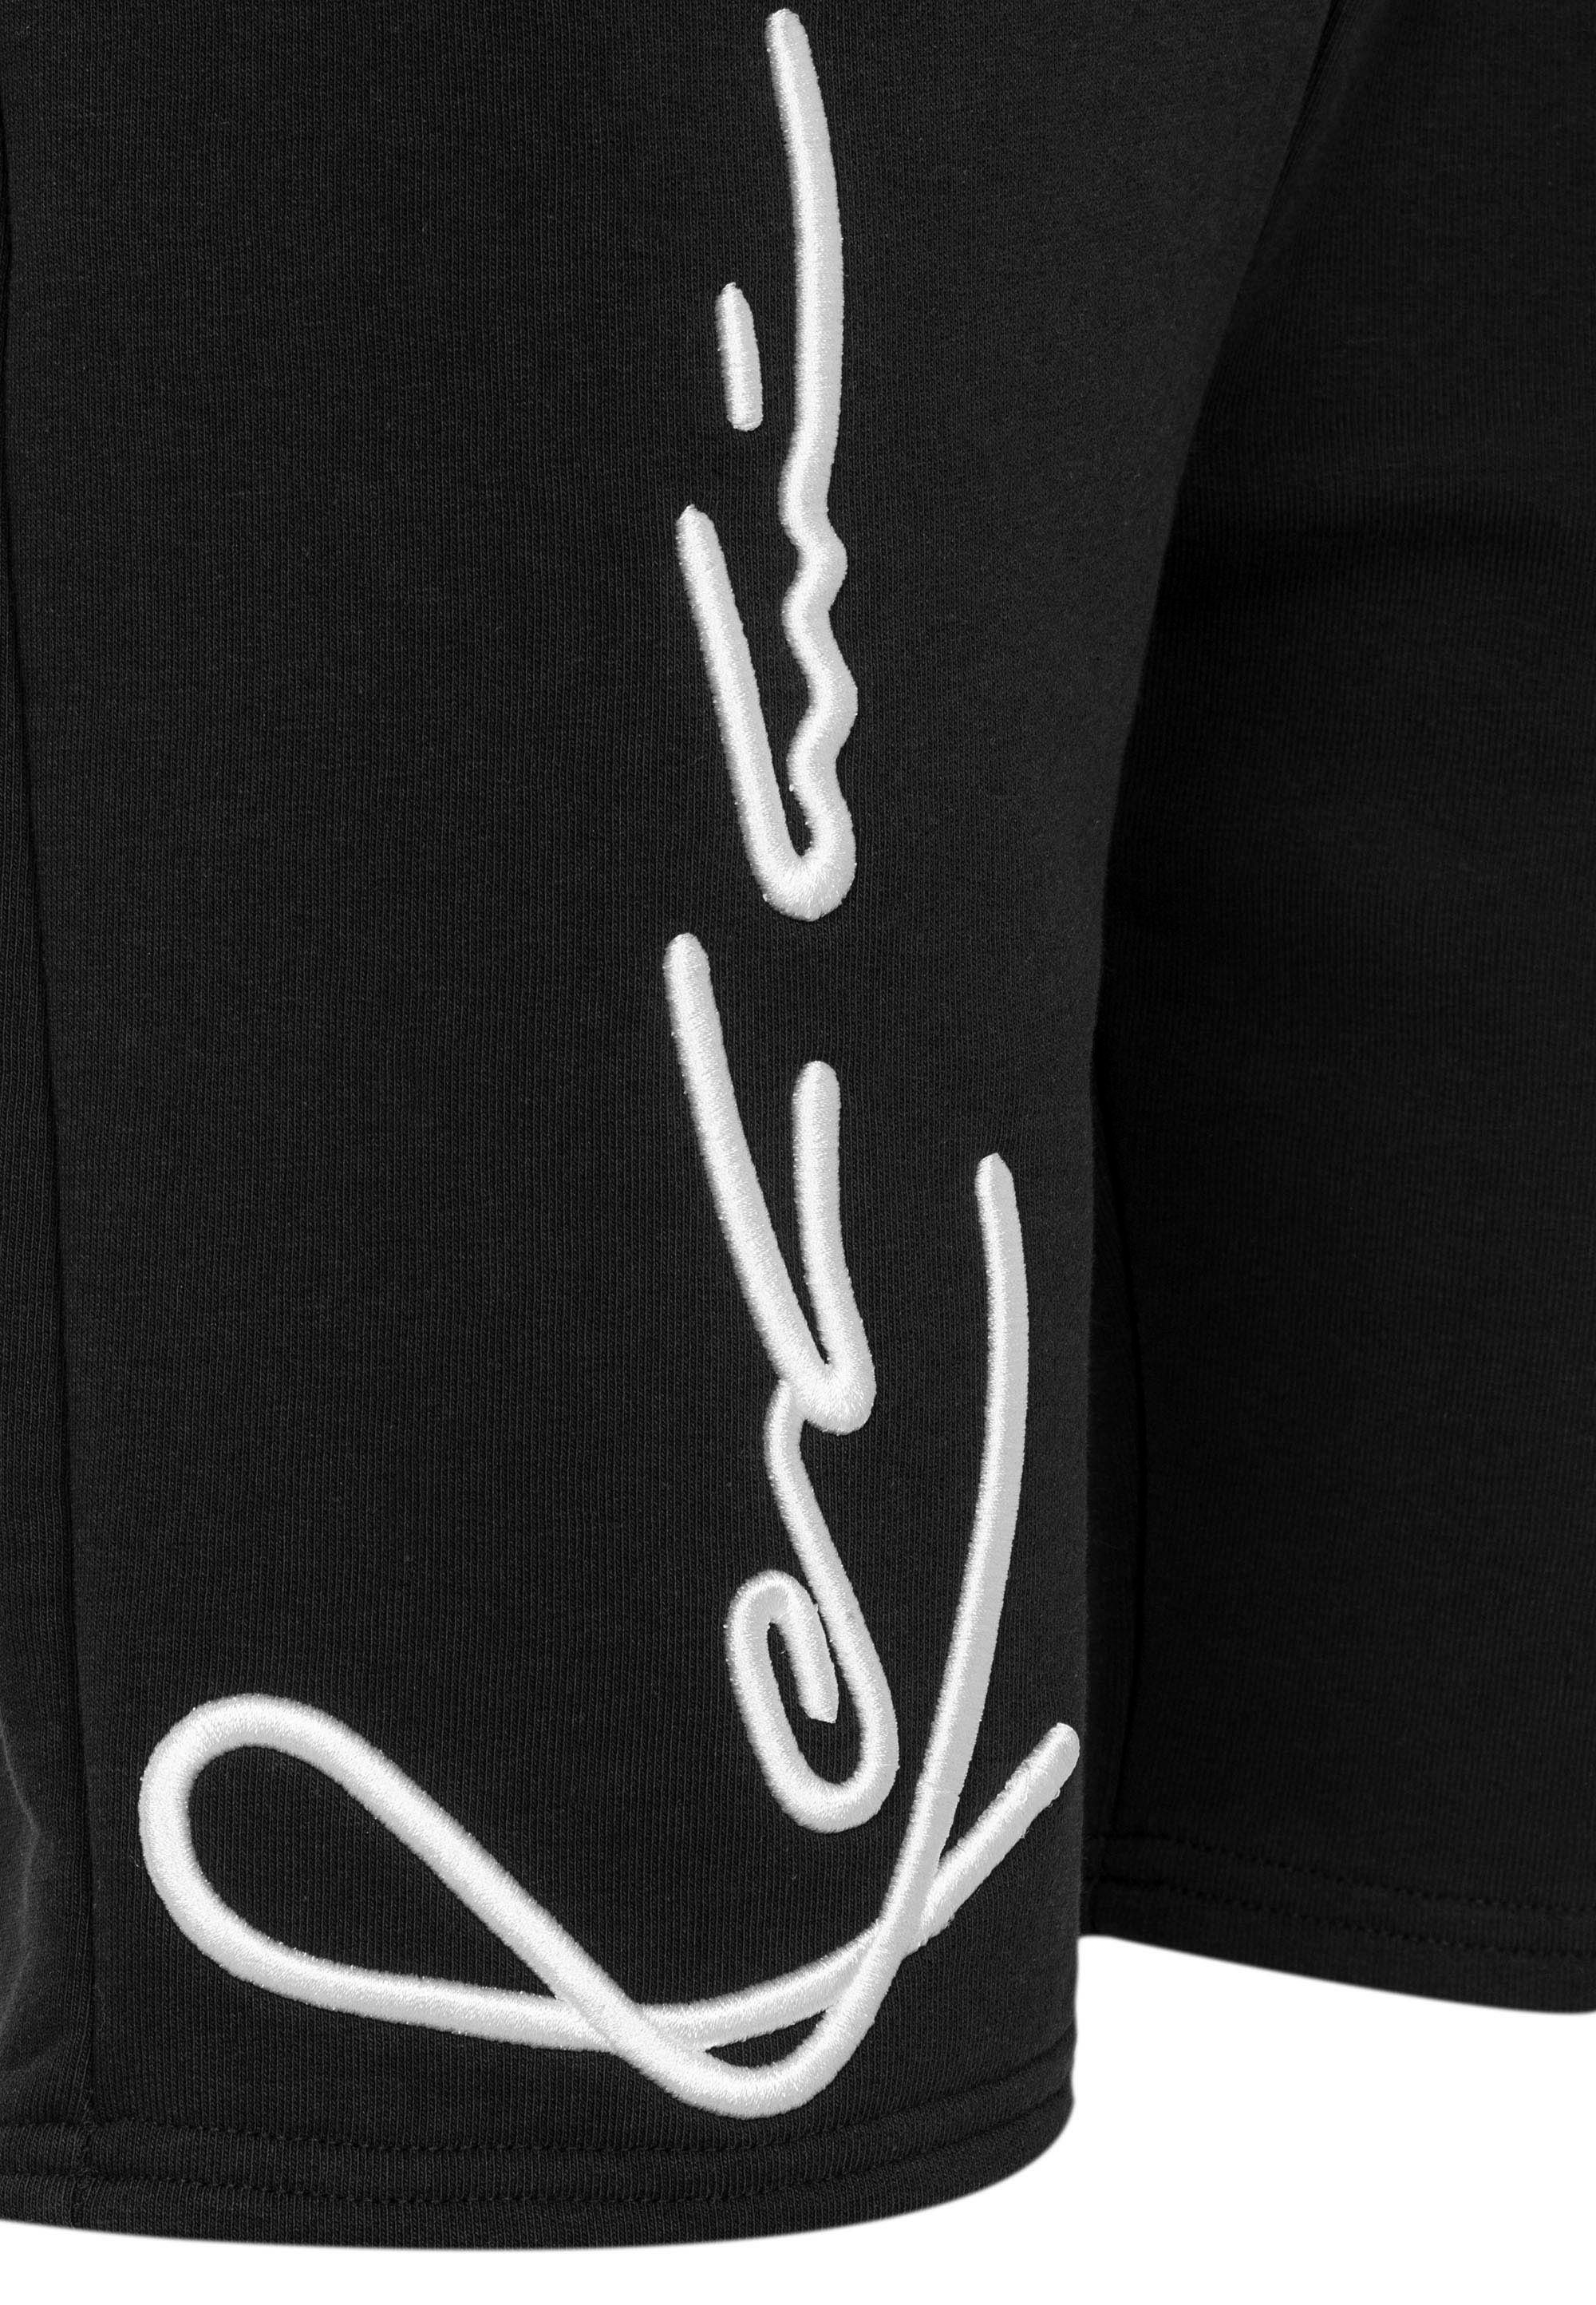 RedBridge Shorts Southport mit vertikalem Redbridge-Schriftzug schwarz